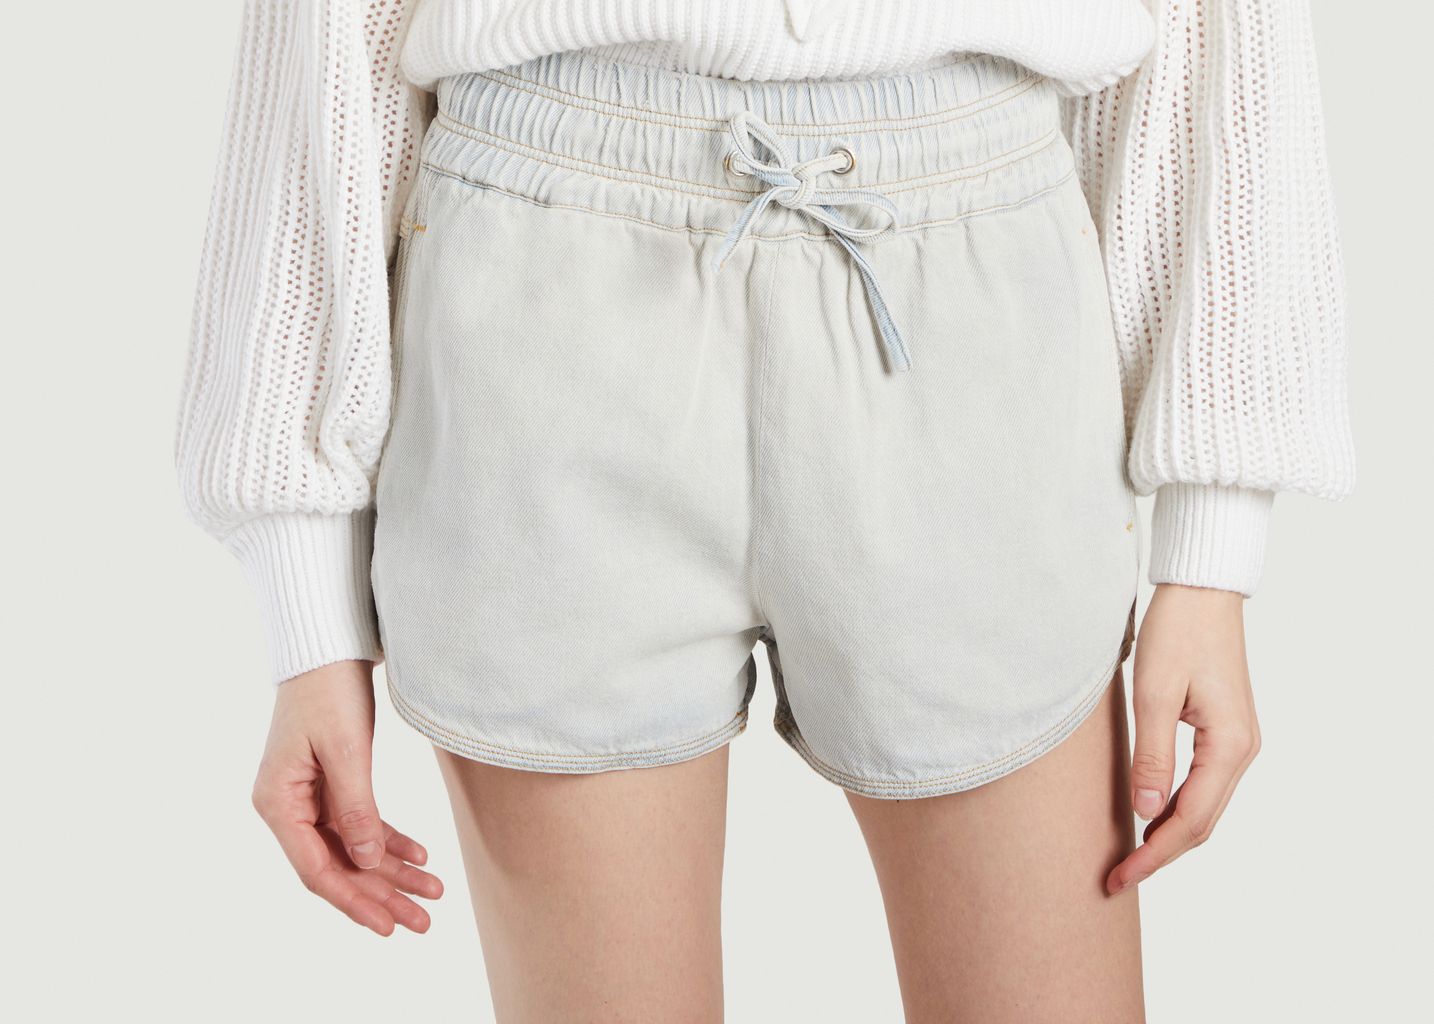 Ouaga cotton shorts - IRO